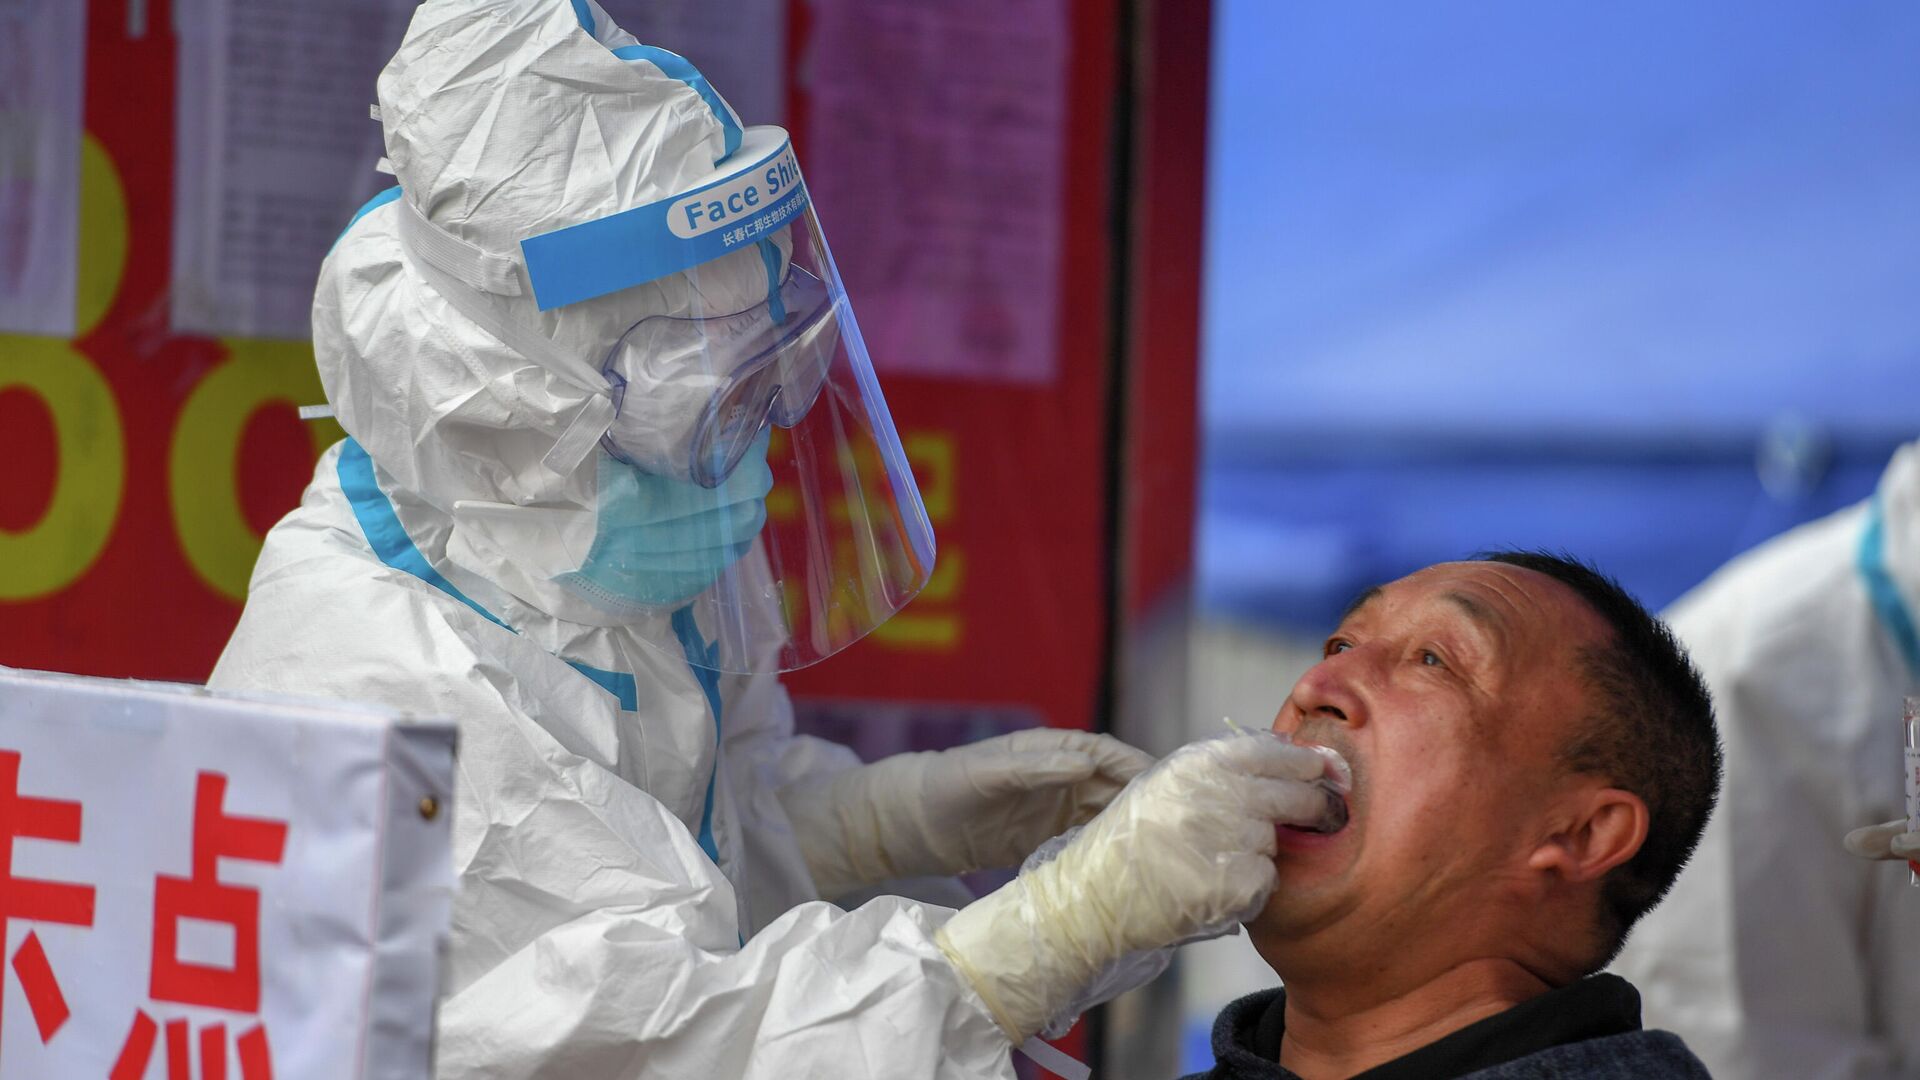 Медицинский работник делает тест на COVID-19 мужчине в провинции Цзилинь, Китай - РИА Новости, 1920, 26.11.2020